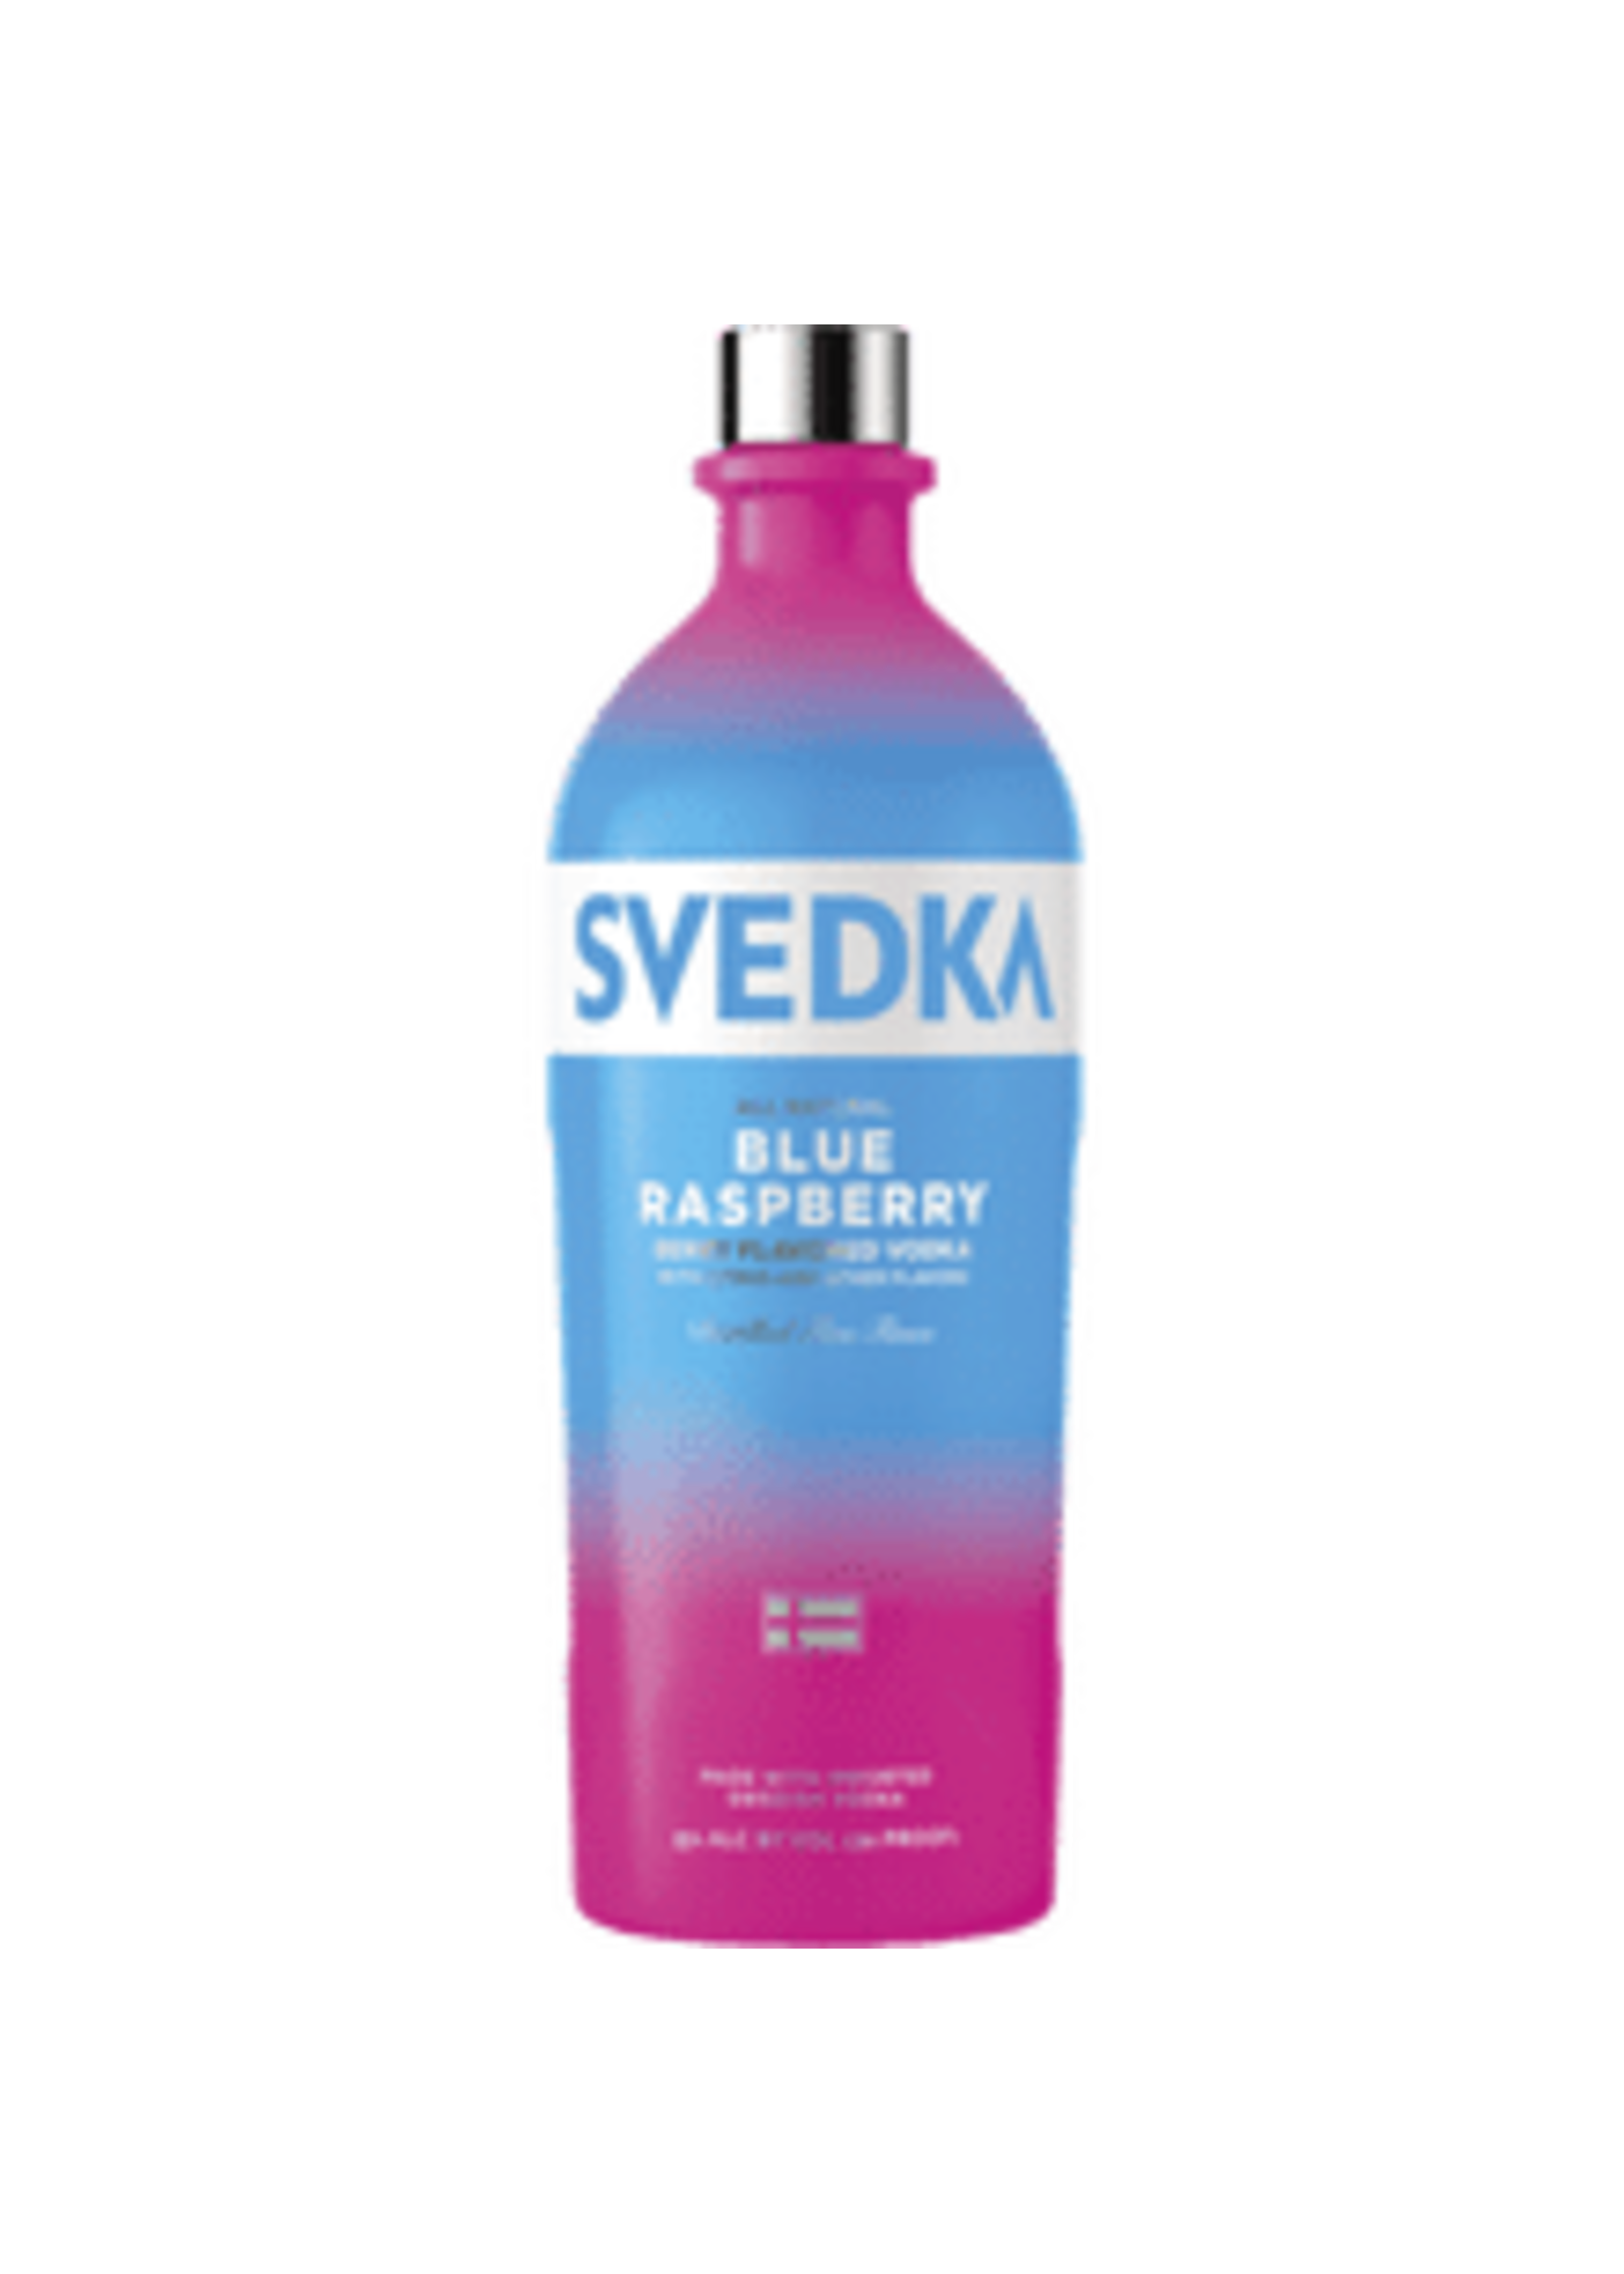 Svedka Vodka Svedka Blue Raspberry Vodka 70Proof 1.75 Ltr